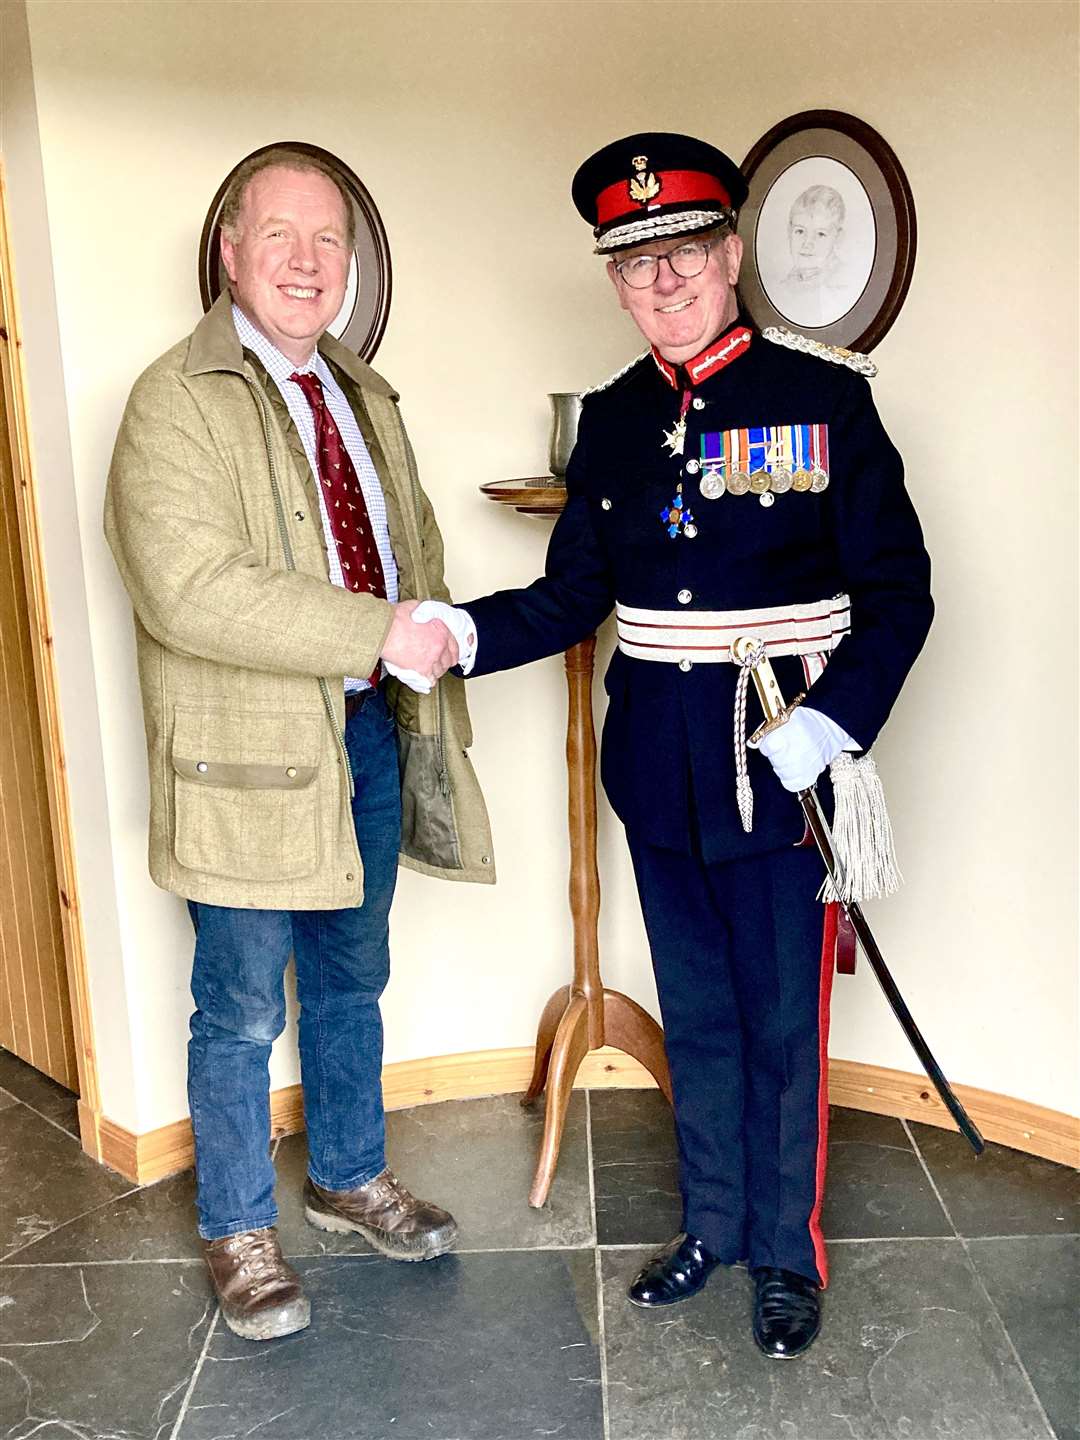 Lord-Lieutenant Major General Patrick Marriott welcomed Neil Macdonald as the Sutherland Lieutenancy’s newest Deputy Lieutenant.